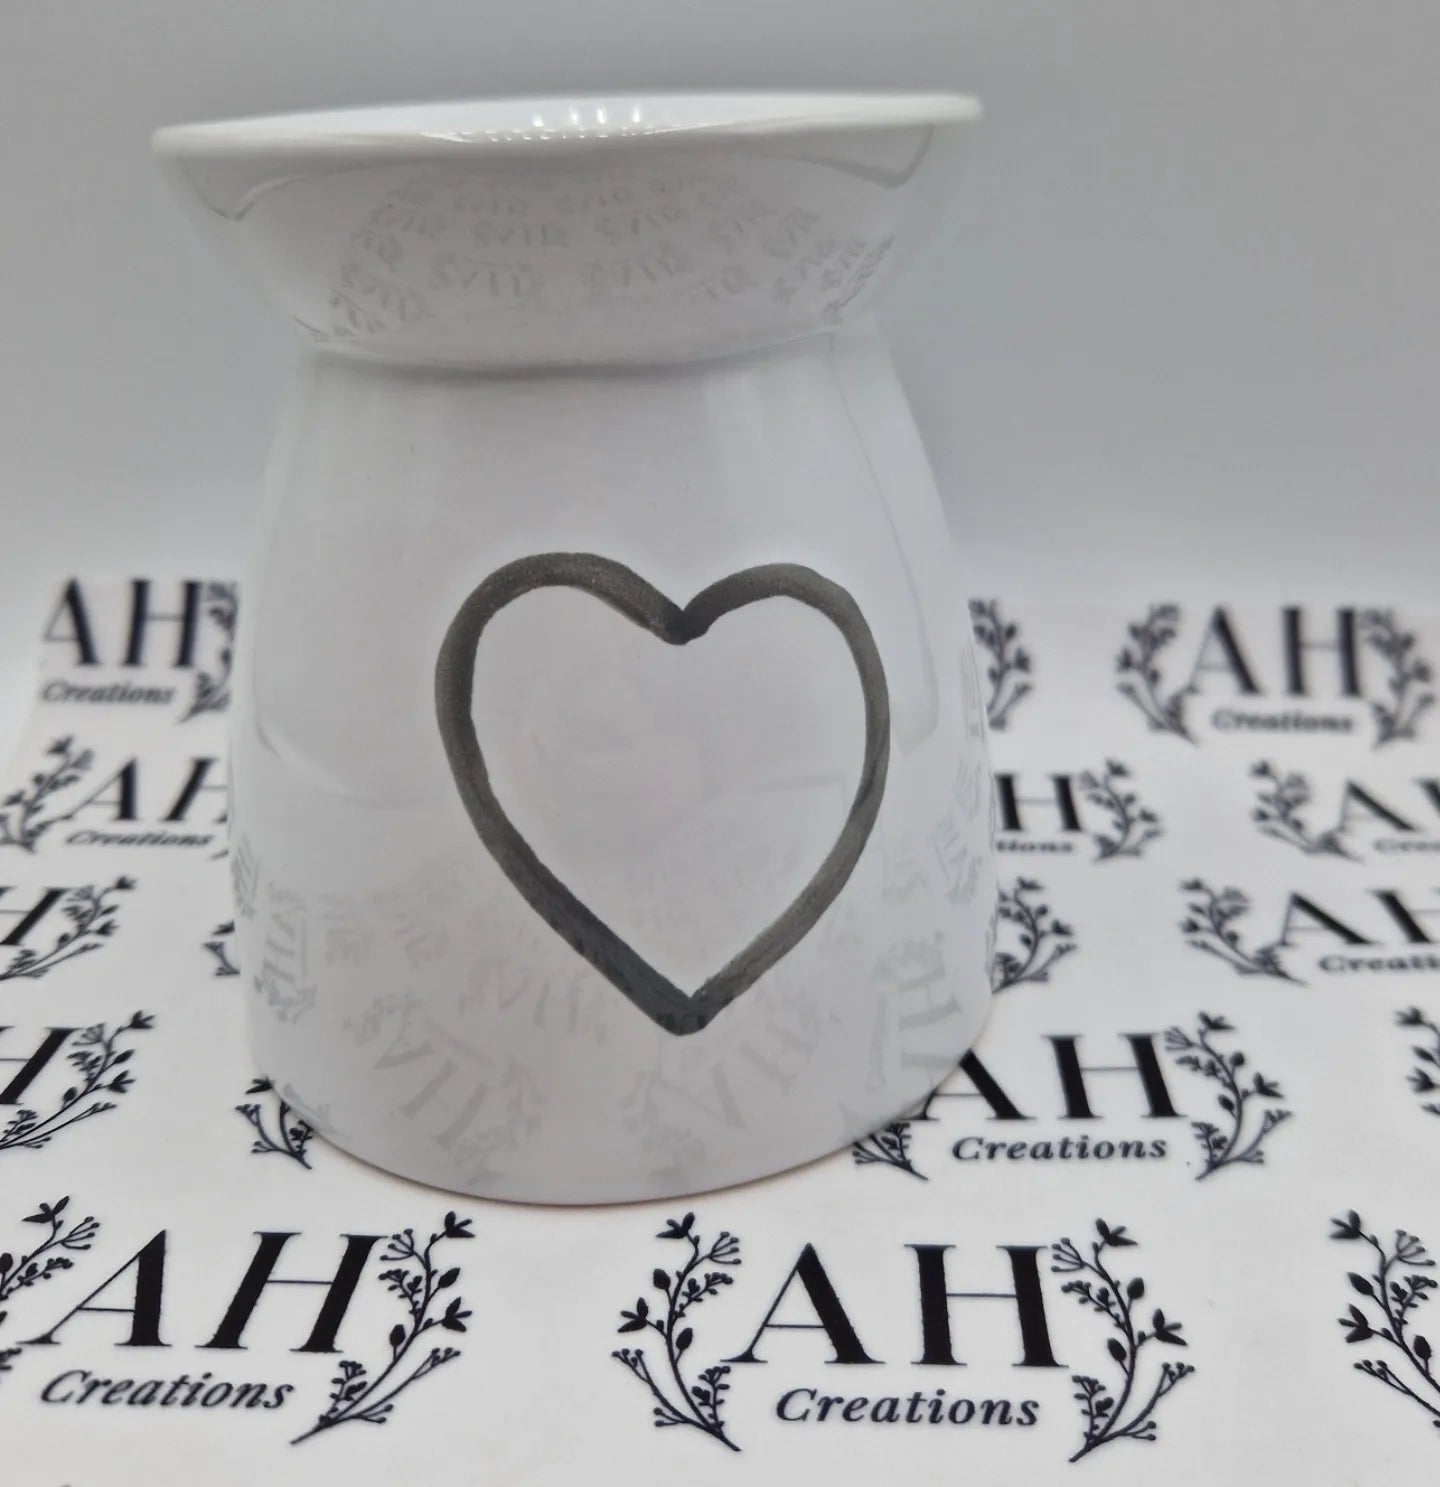 White ceramic burner with grey heart